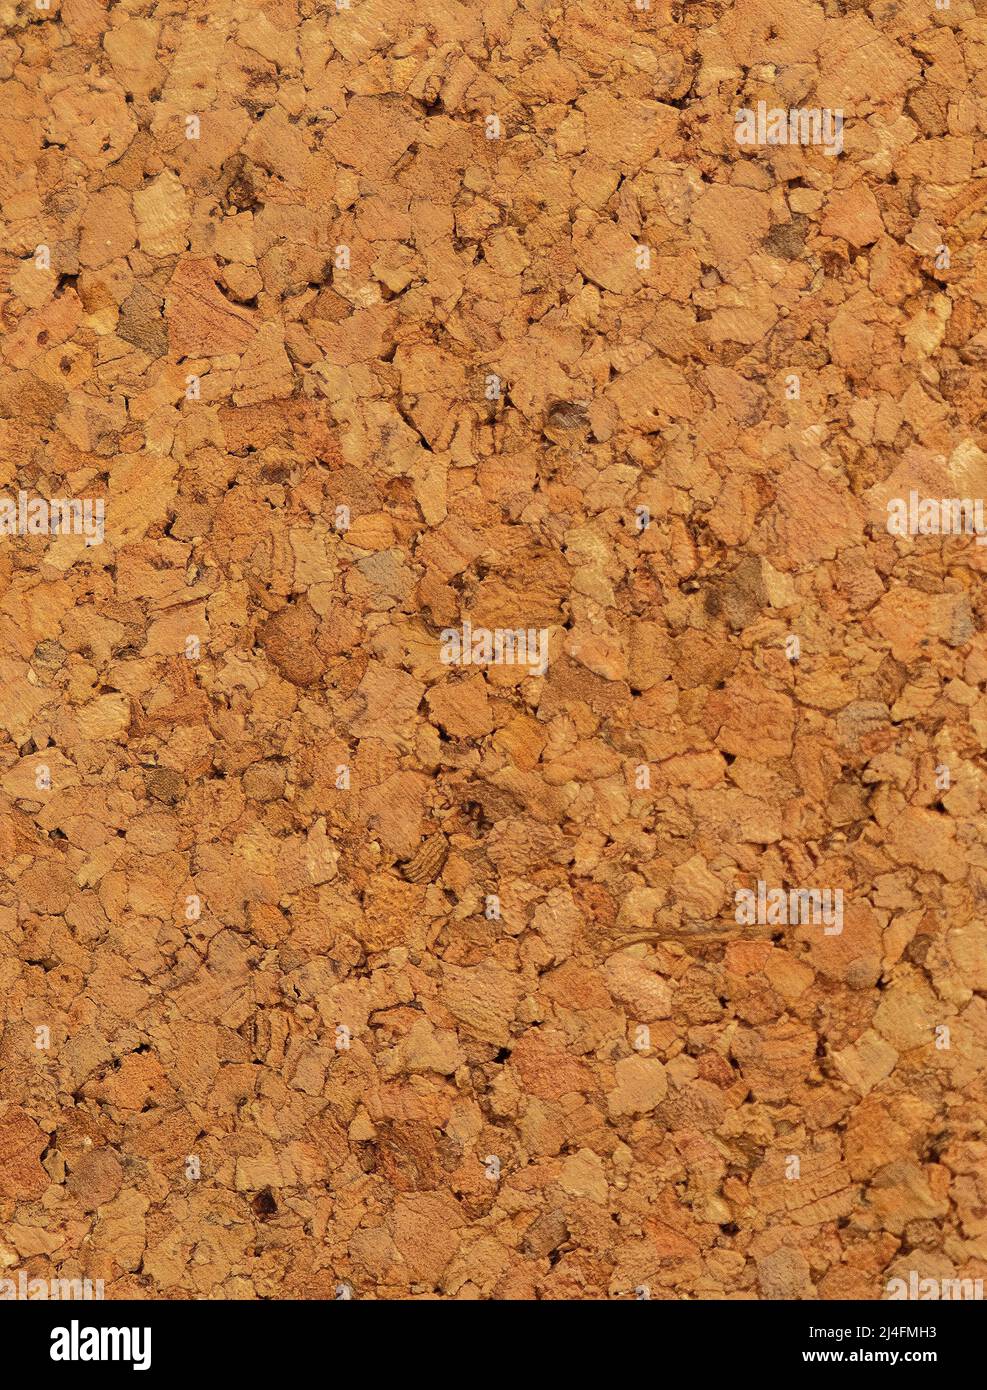 Background pattern provided by a close up of cork matting Stock Photo